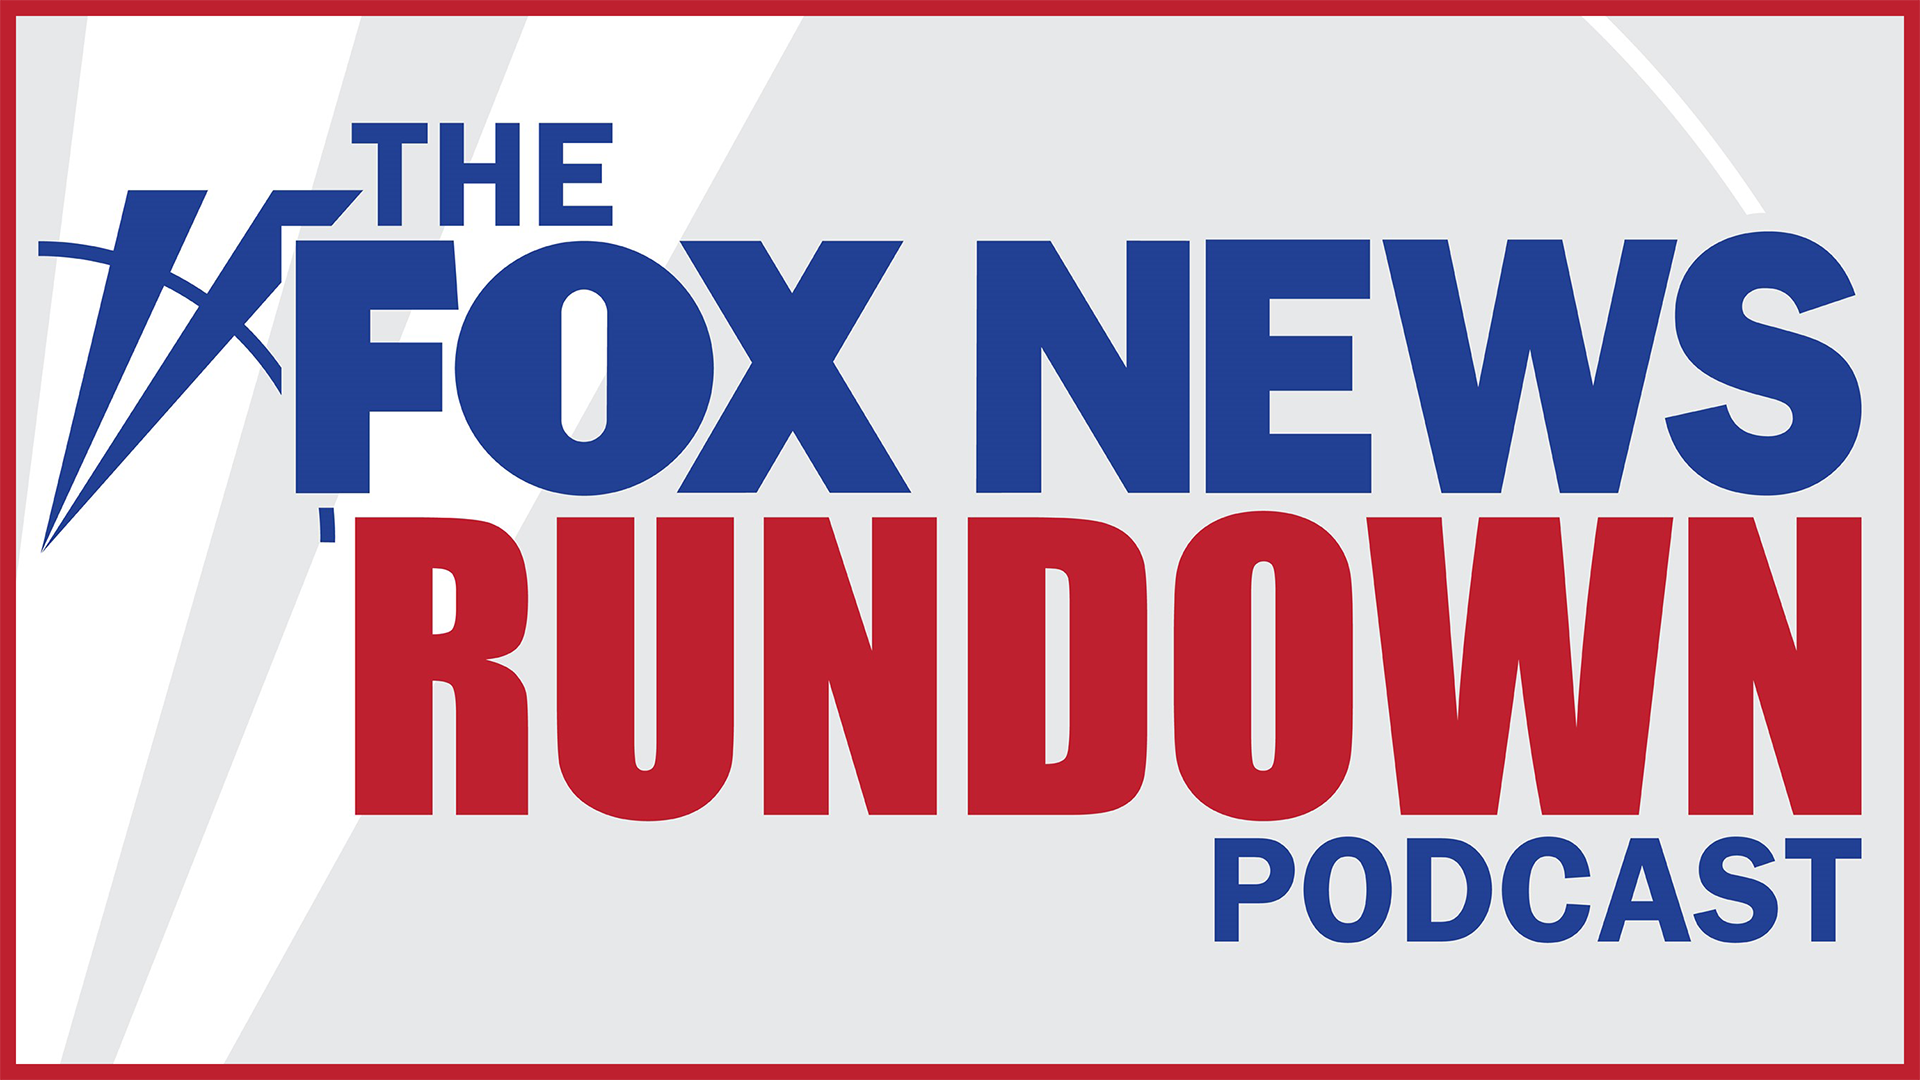 FOX News Radio Live Channel Coverage